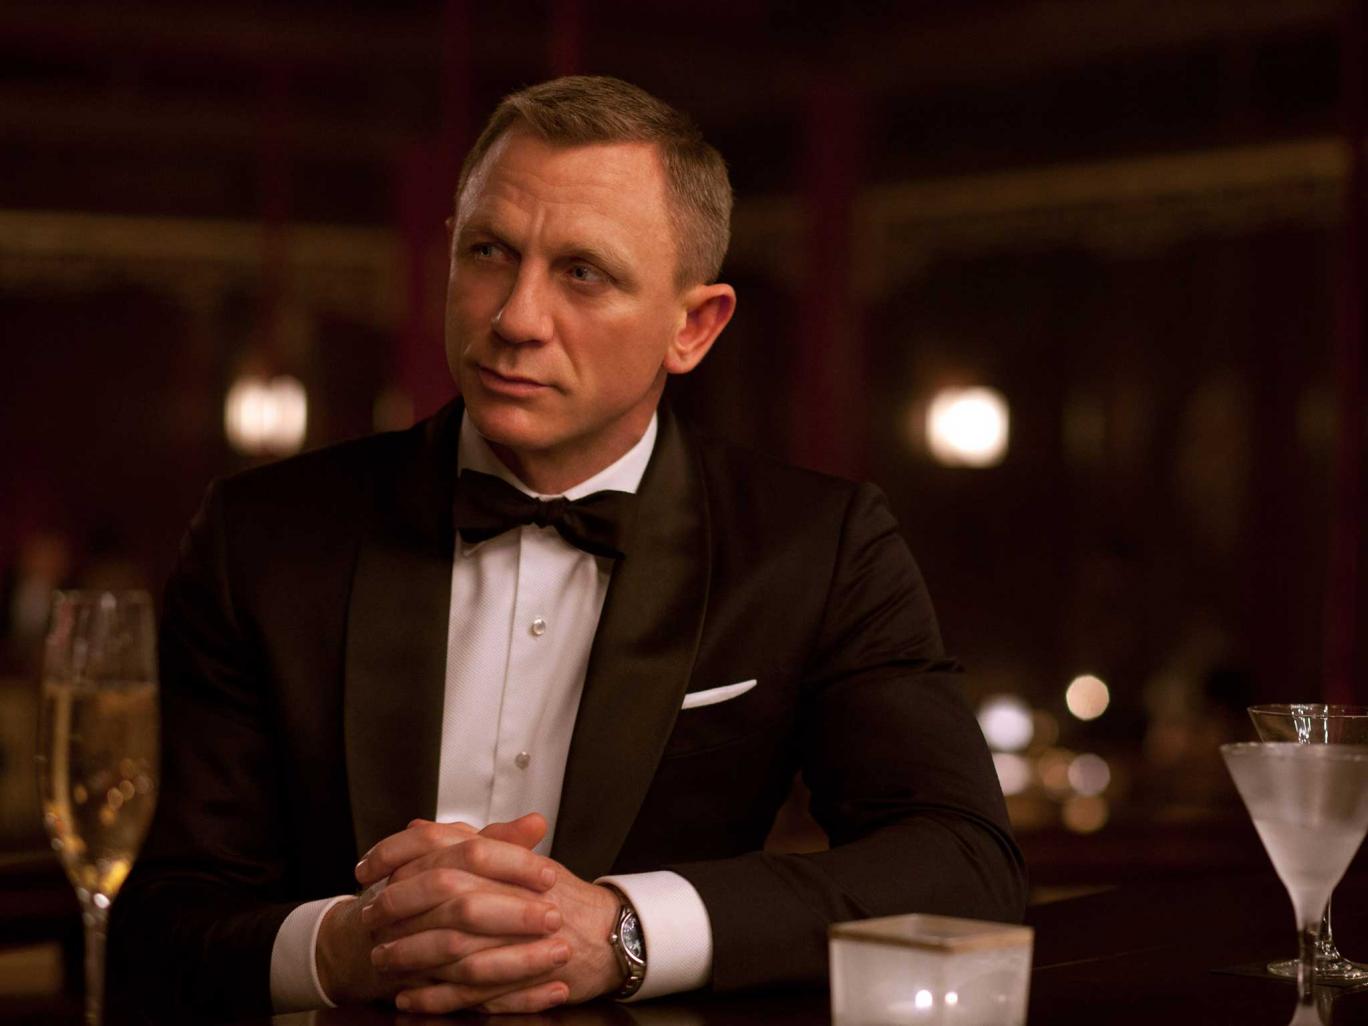 Craig as James Bond